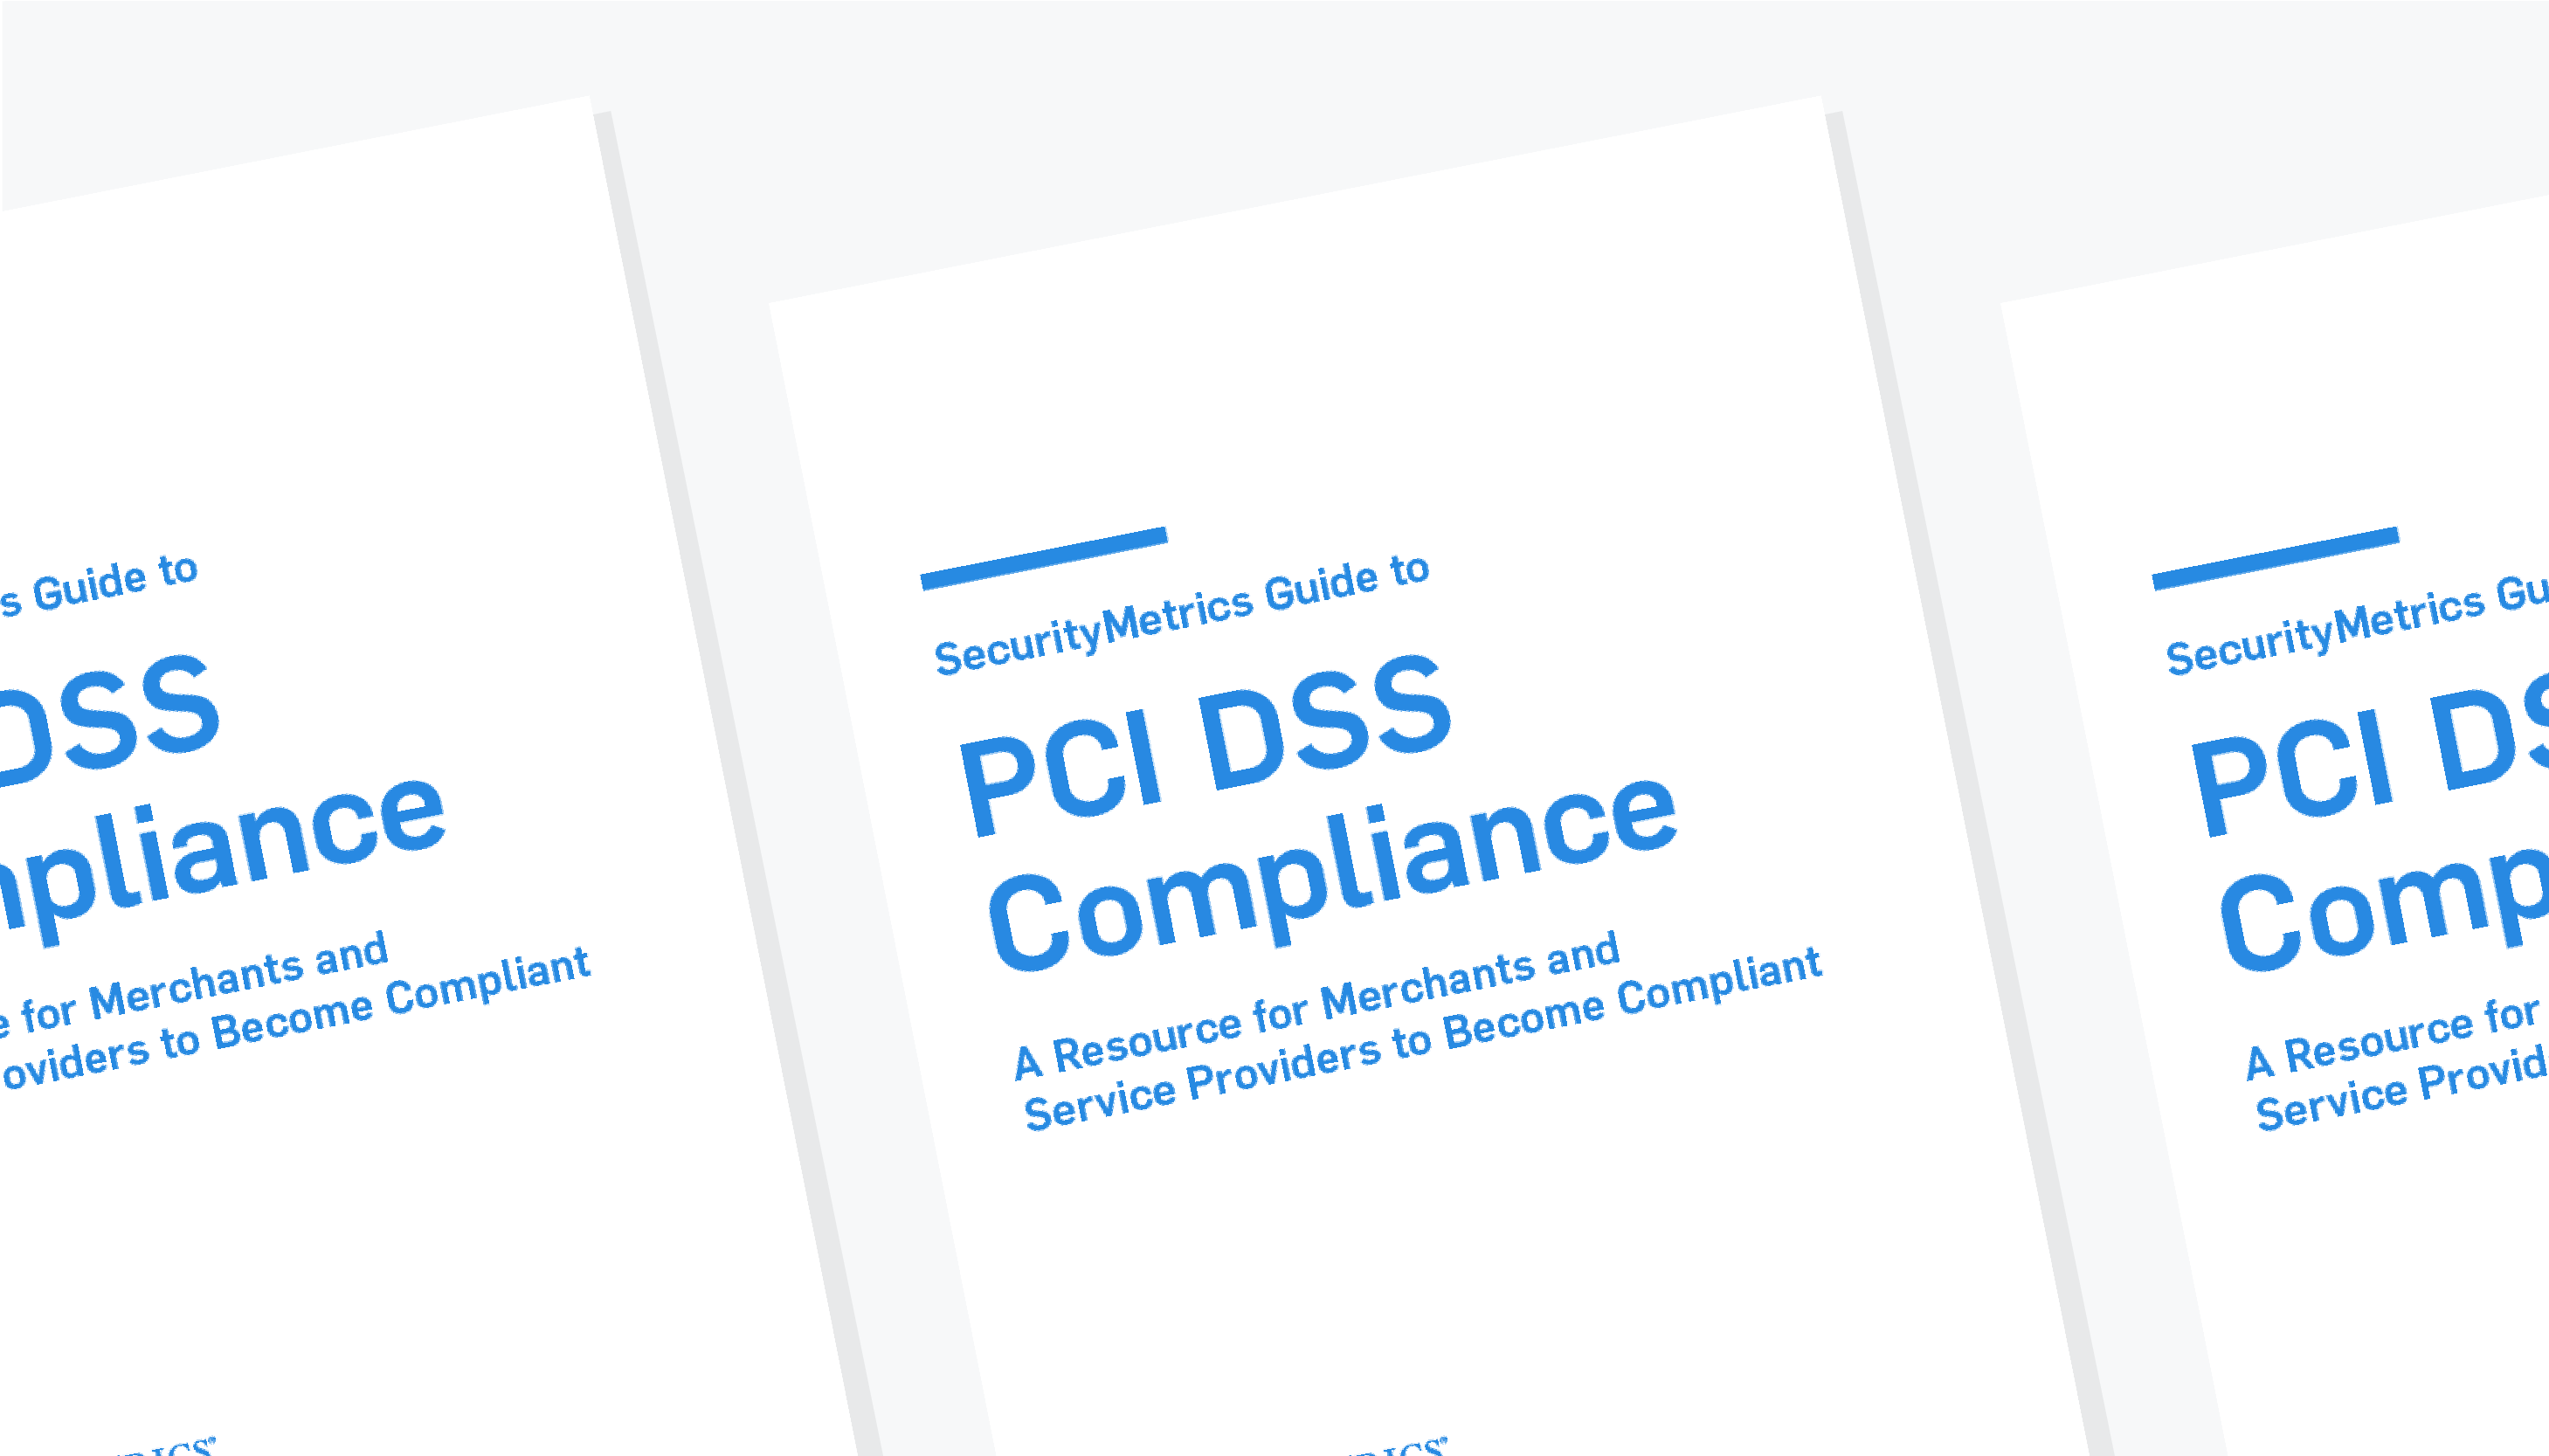 pci compliance guide